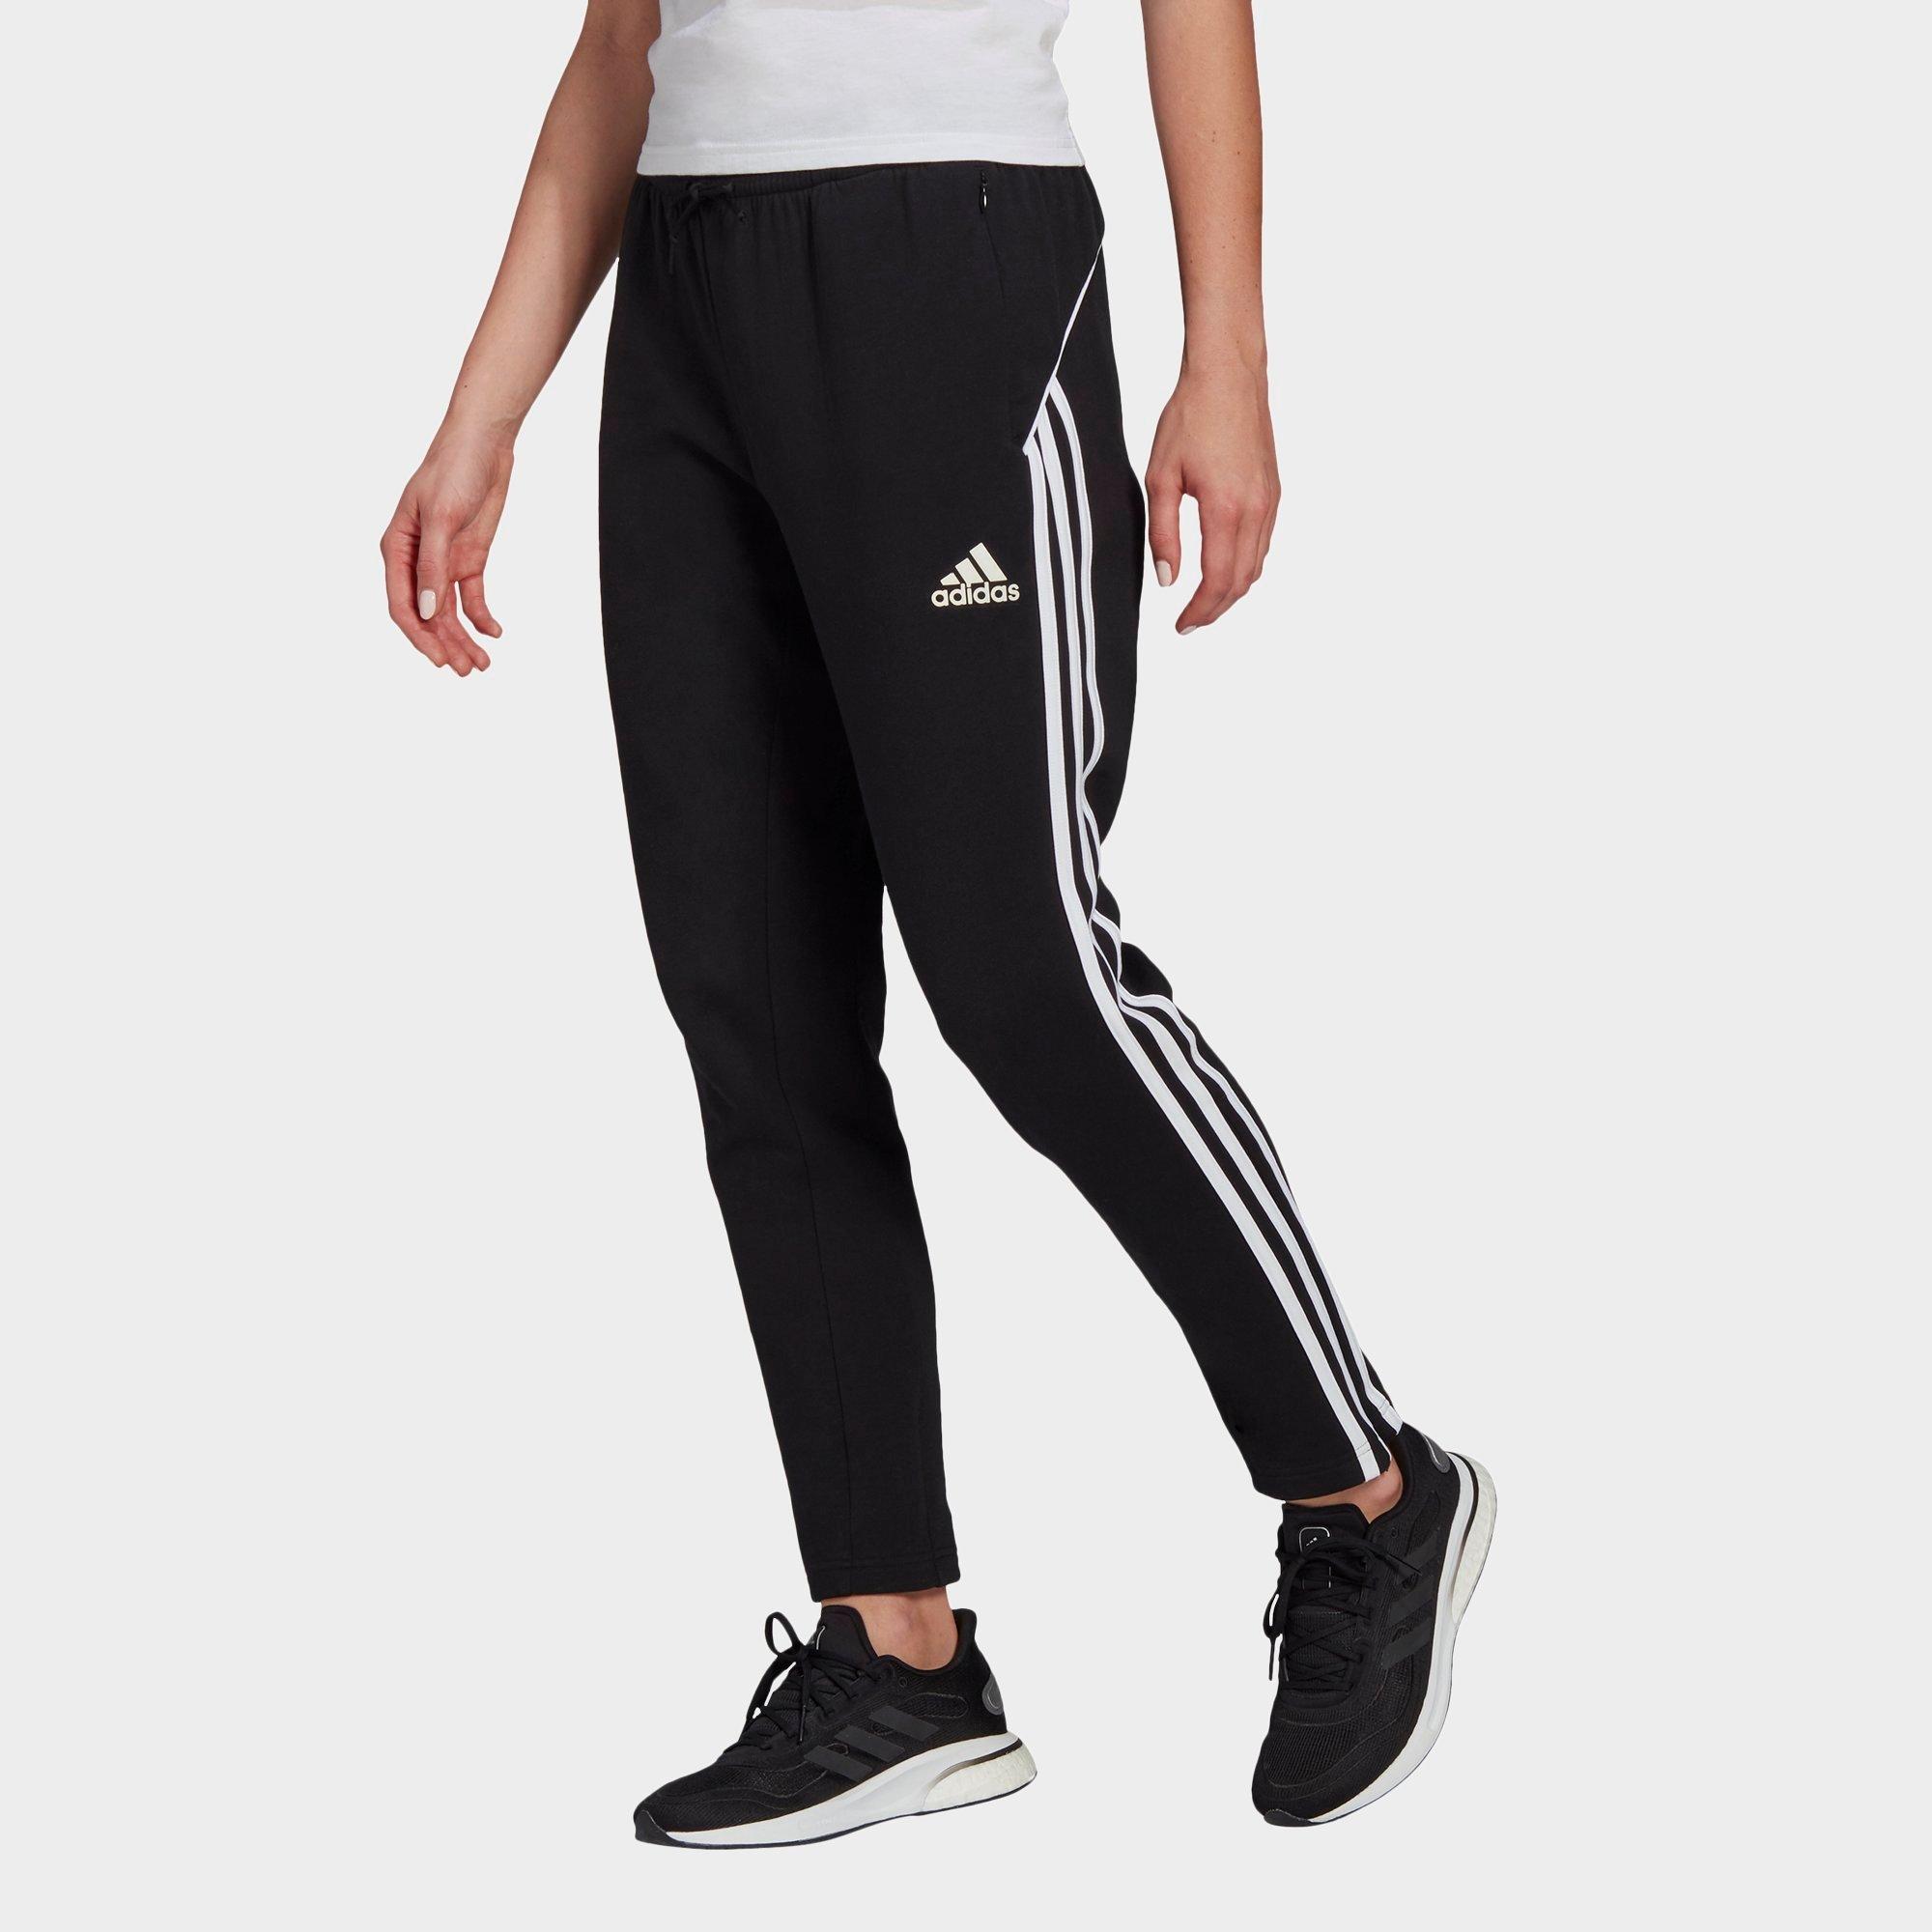 adidas track pants womens joggers